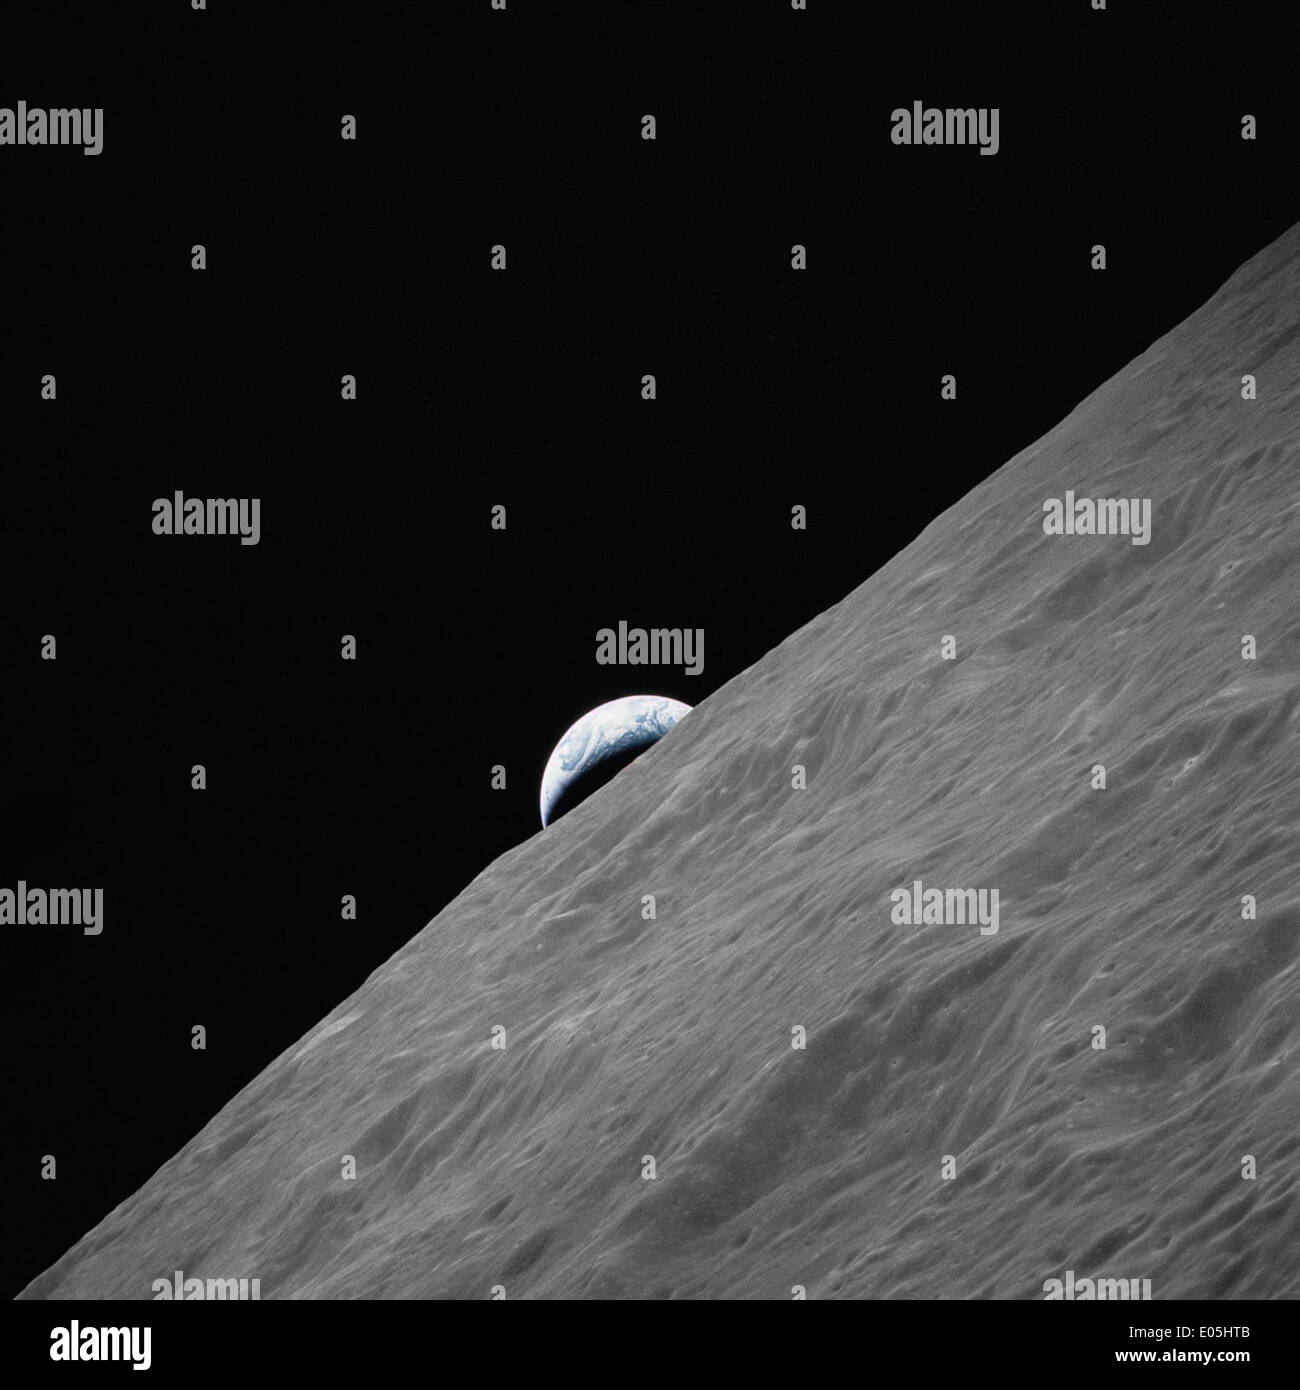 Cresent Earth rises above lunar horizon Stock Photo